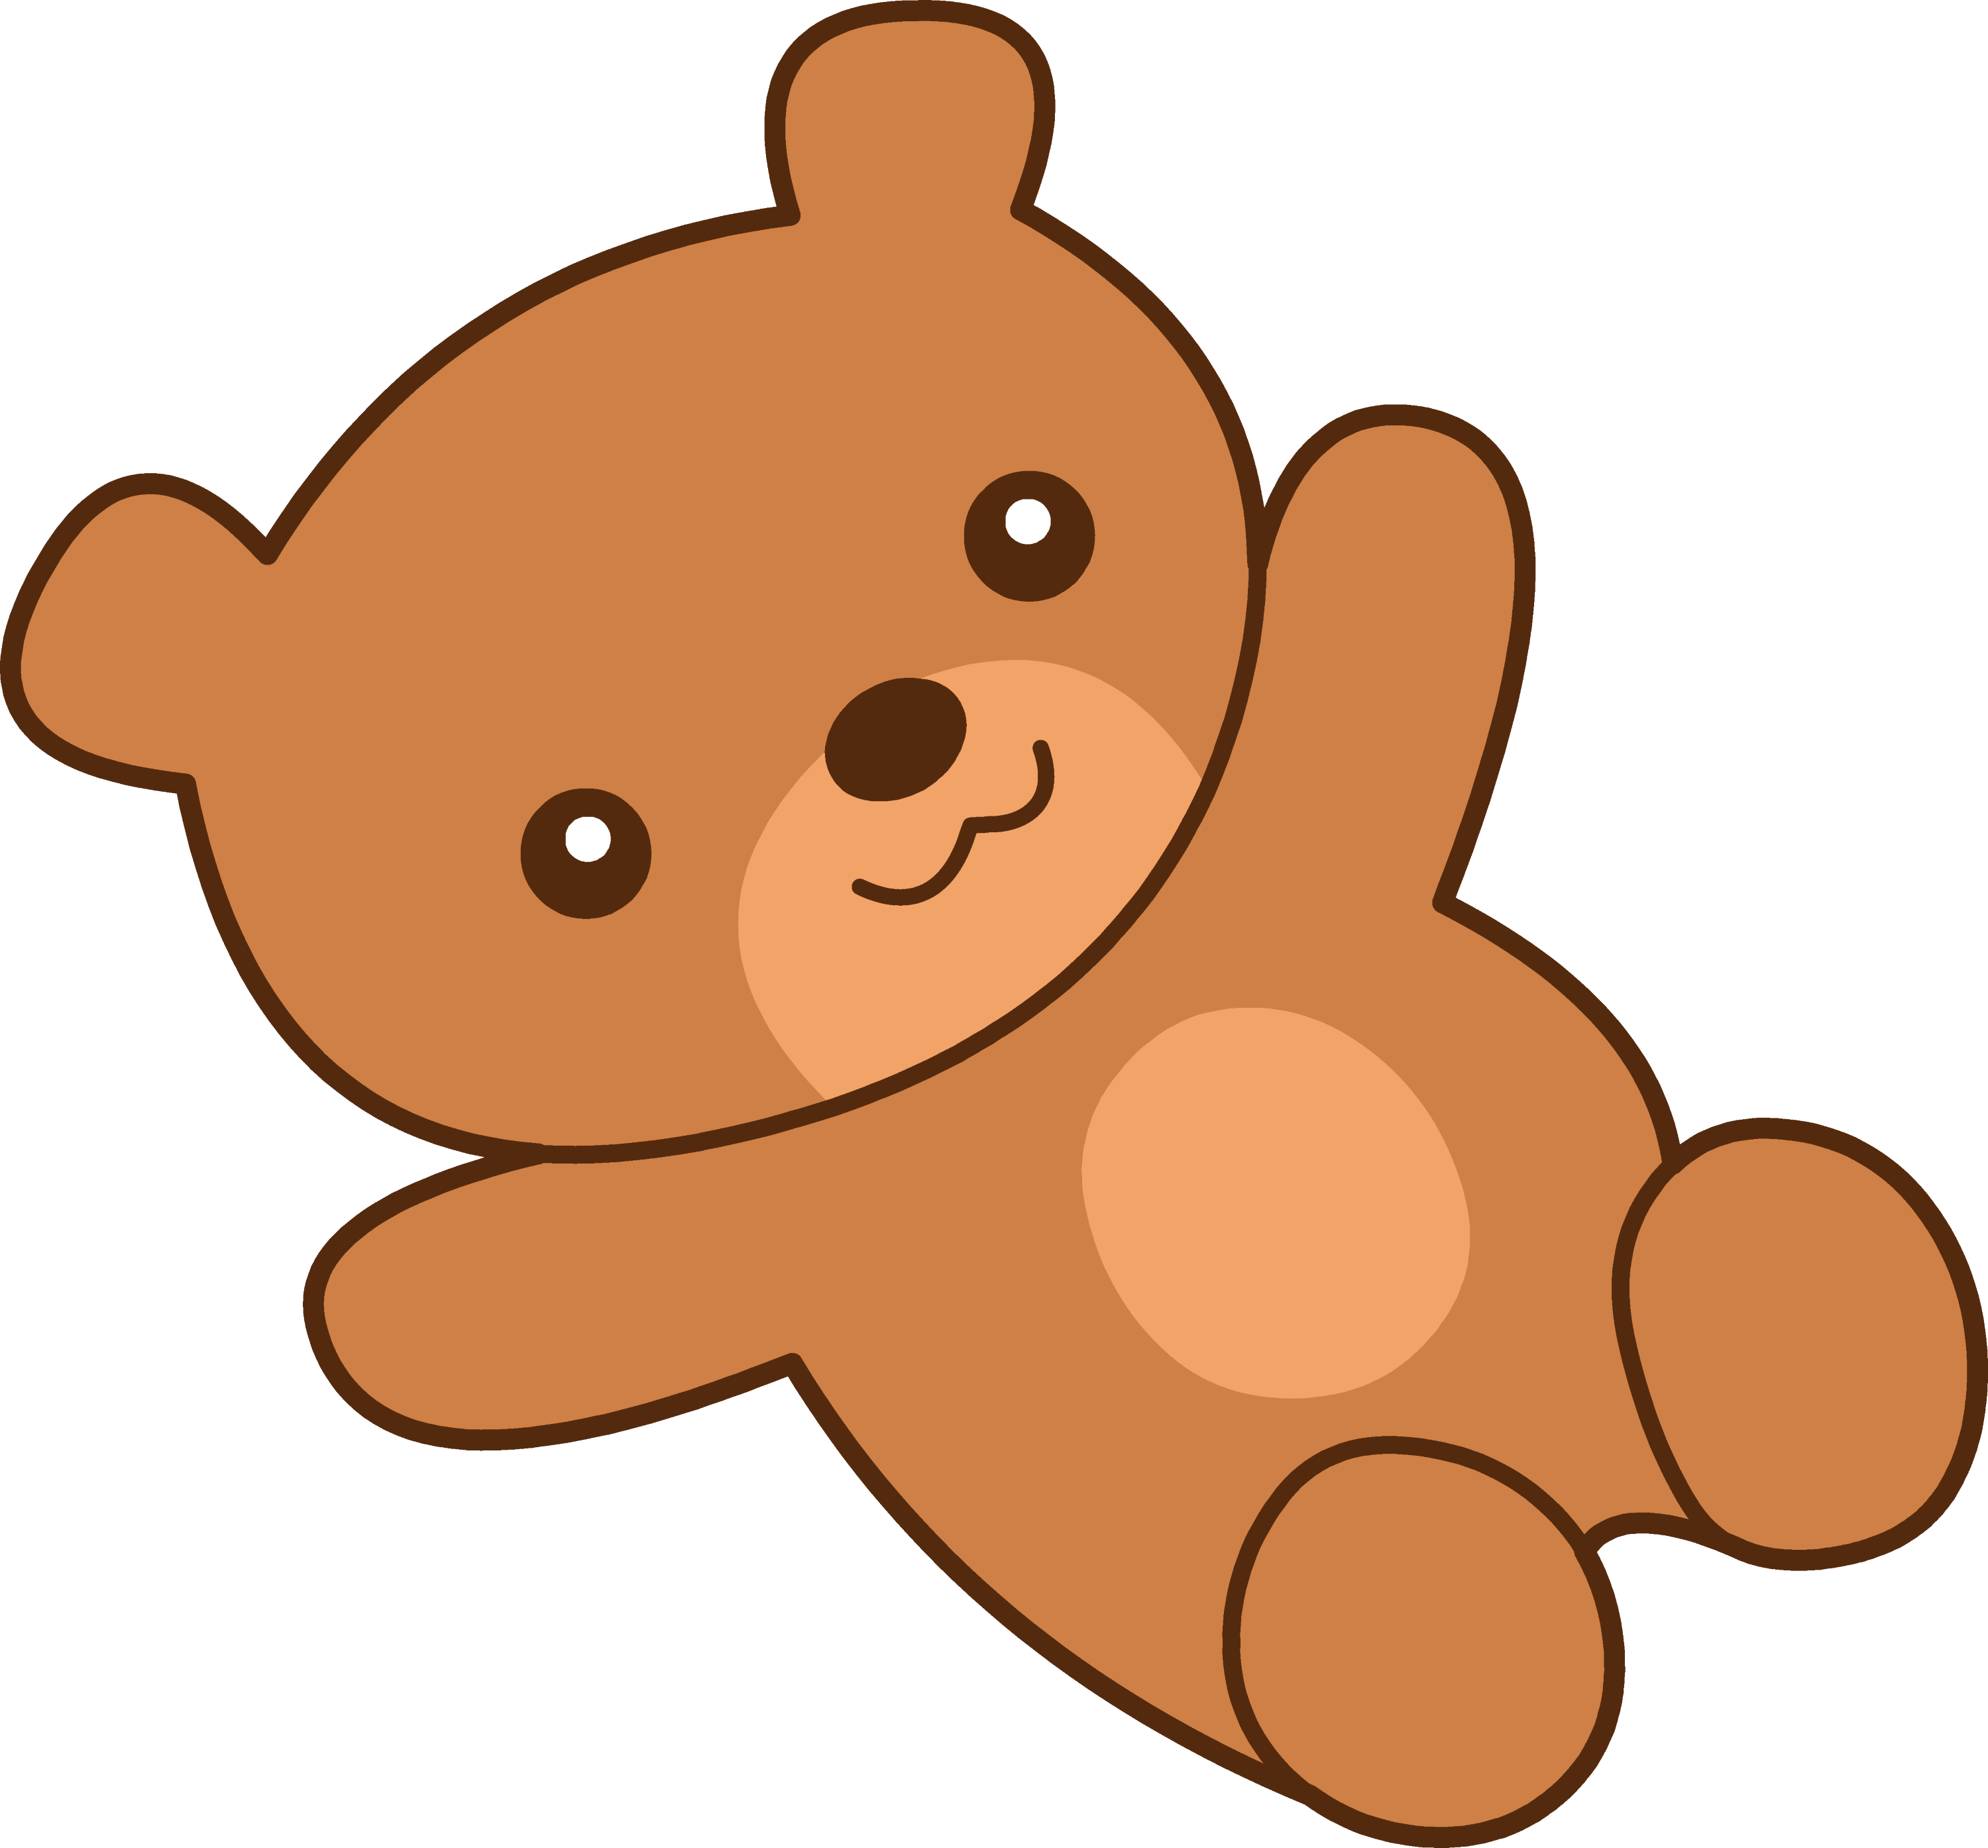 free clipart of teddy bear - photo #3